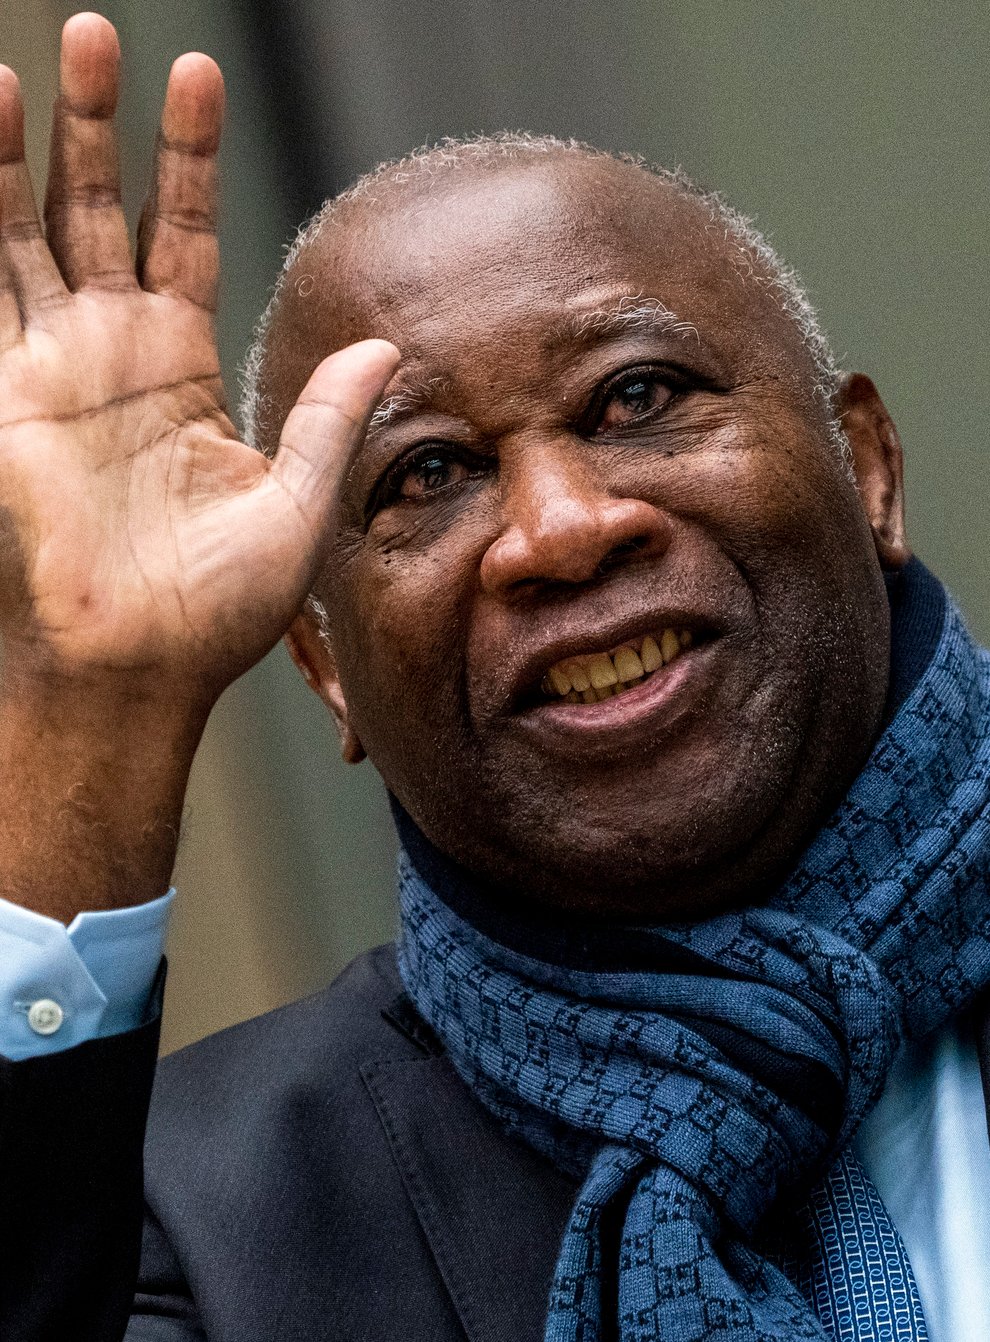 Former Ivory Coast president Laurent Gbagbo